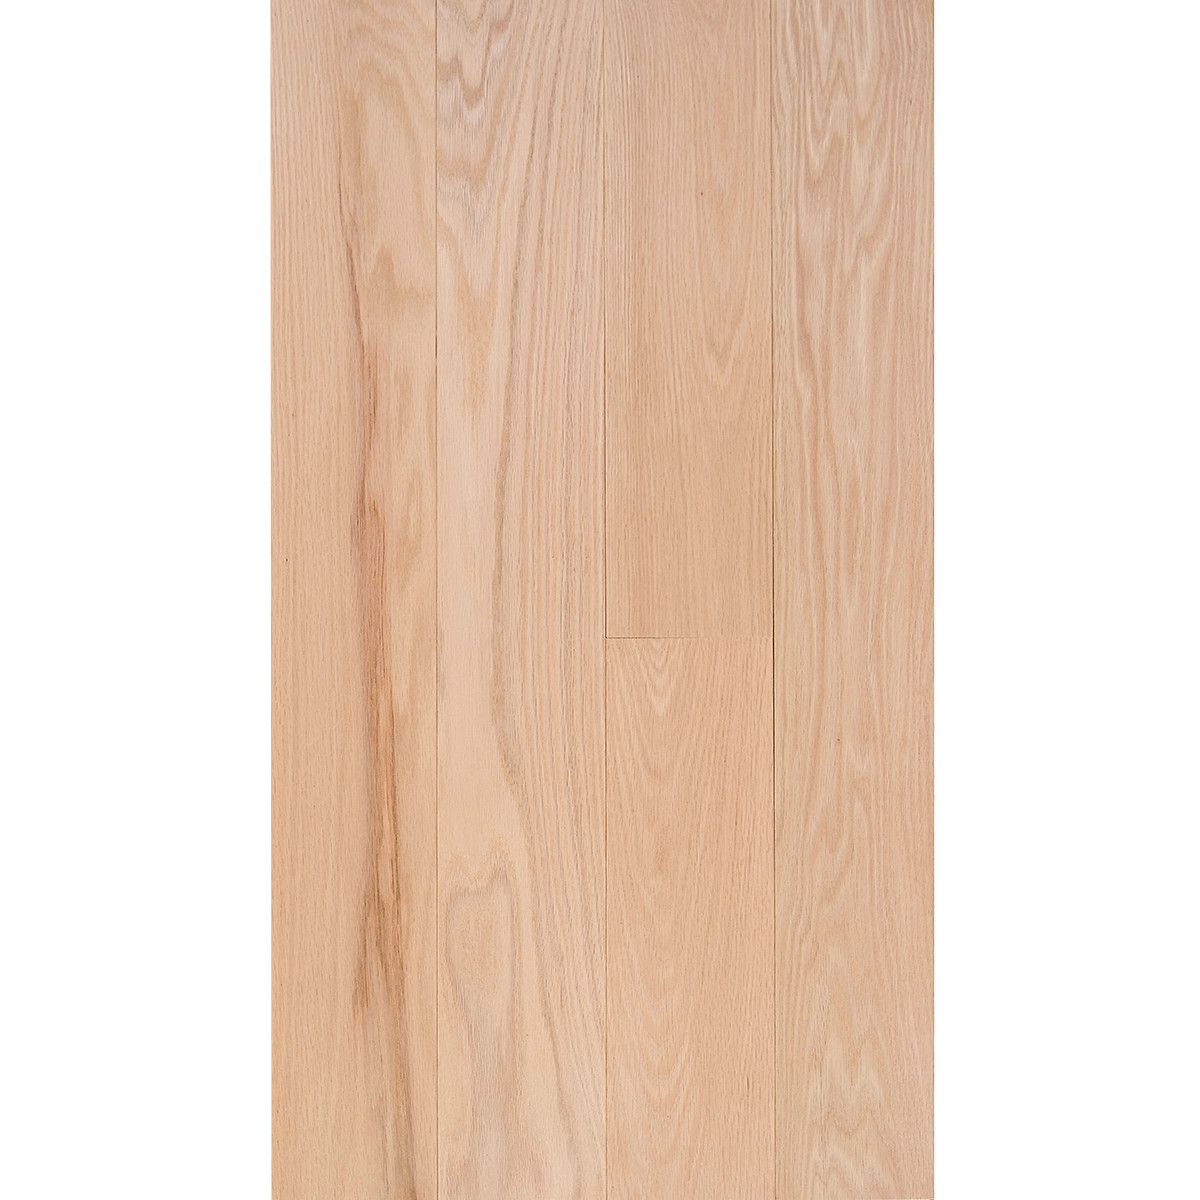 tongue and groove hardwood flooring of red oak 3 4 x 5 select grade flooring with fs 5 redoak select em flooring